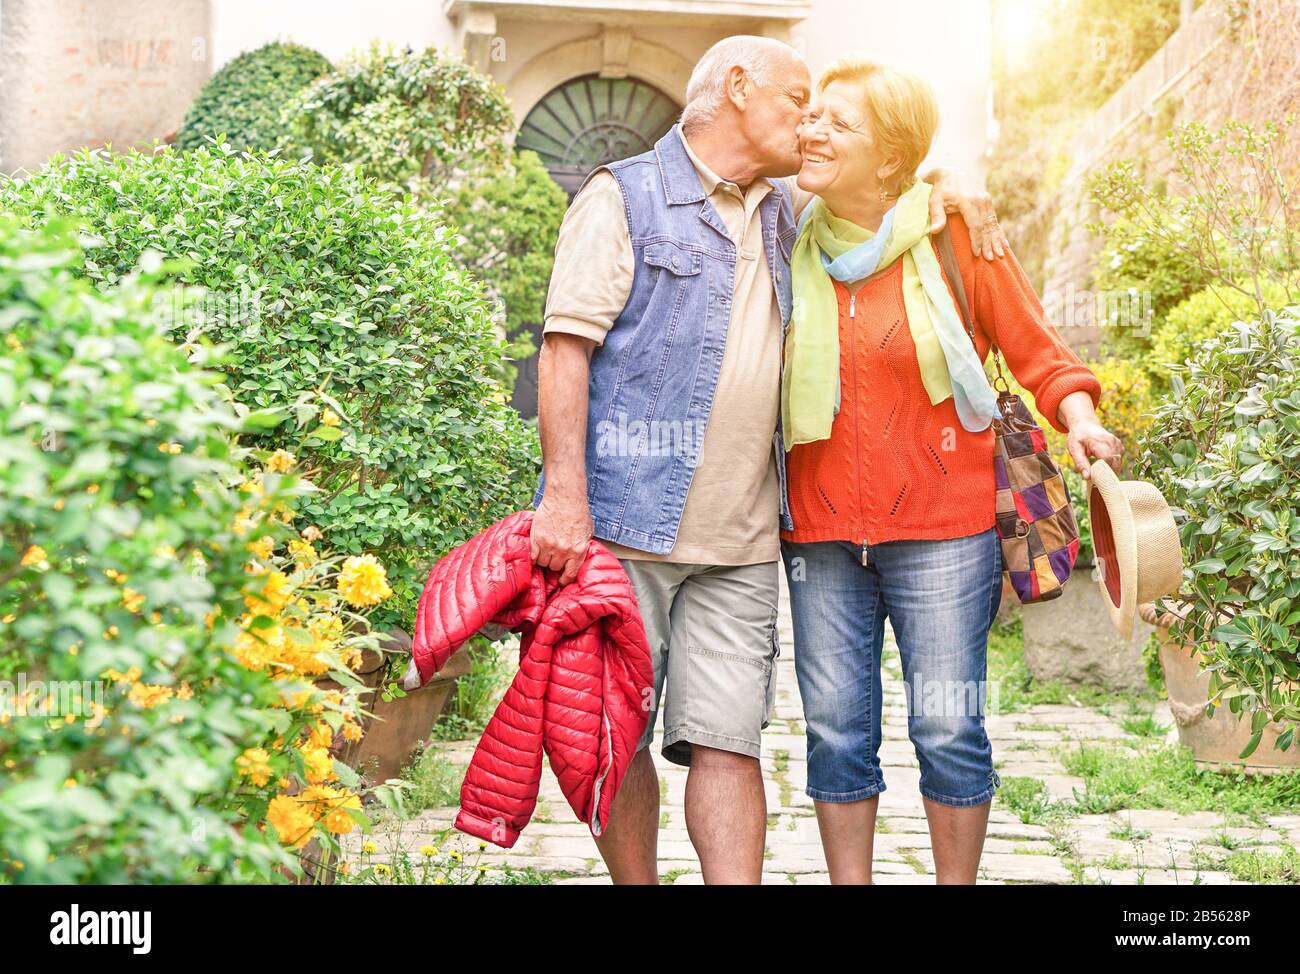 Happy playful senior couple in love tenderly enjoying romantic vacation for wedding anniversary celebration - Joyful elderly active lifestyle - Warm f Stock Photo